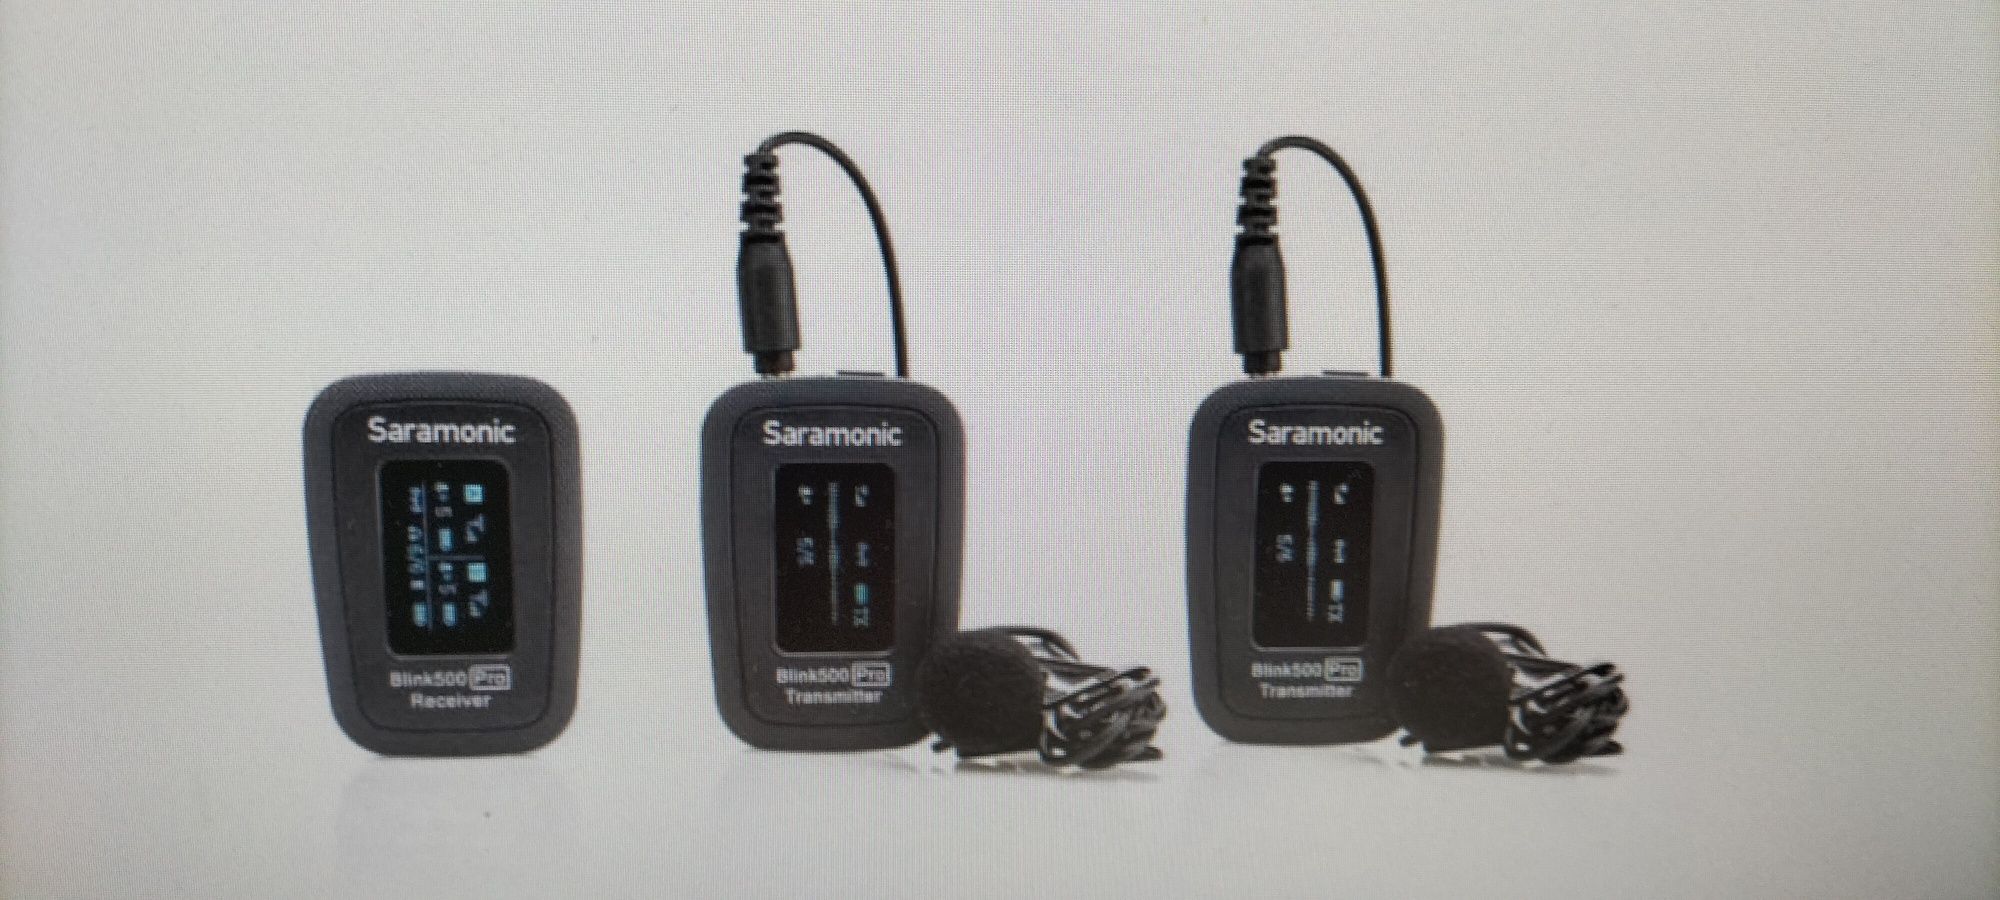 Zestaw Saromonic blink 500 pro mikrofony